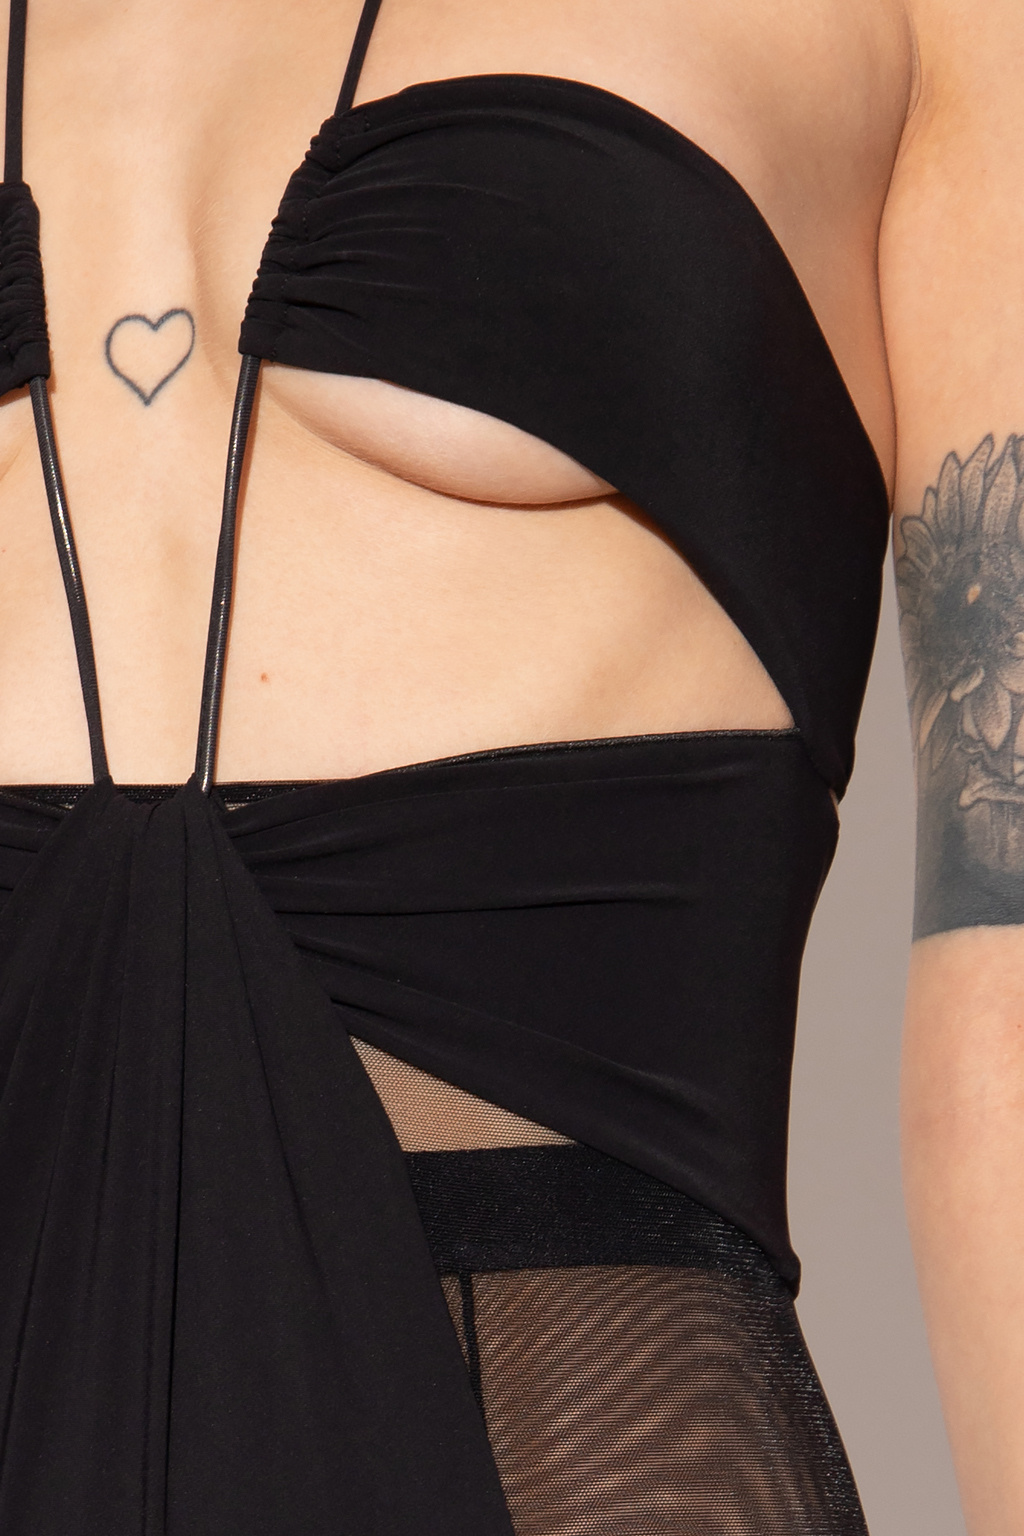 IetpShops, Nensi Dojaka Transparent corset, Women's Clothing